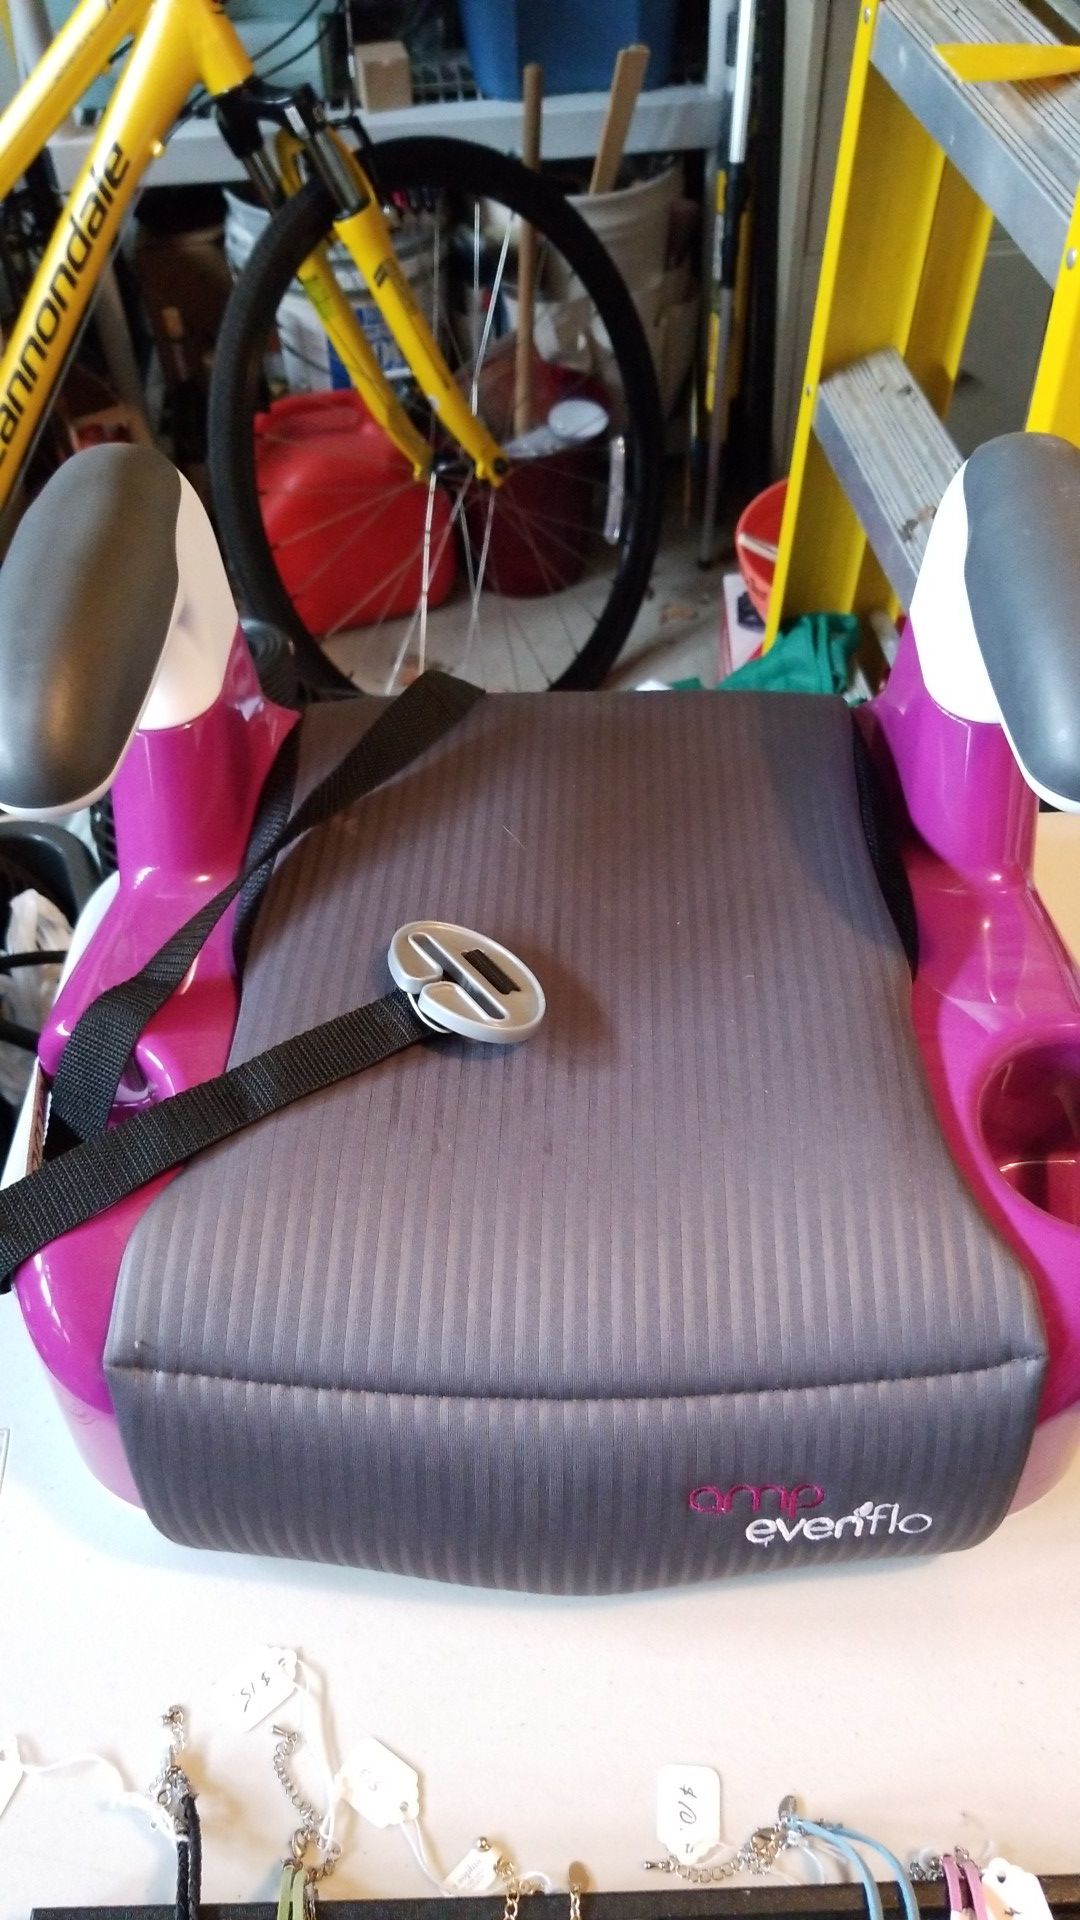 Car booster seat